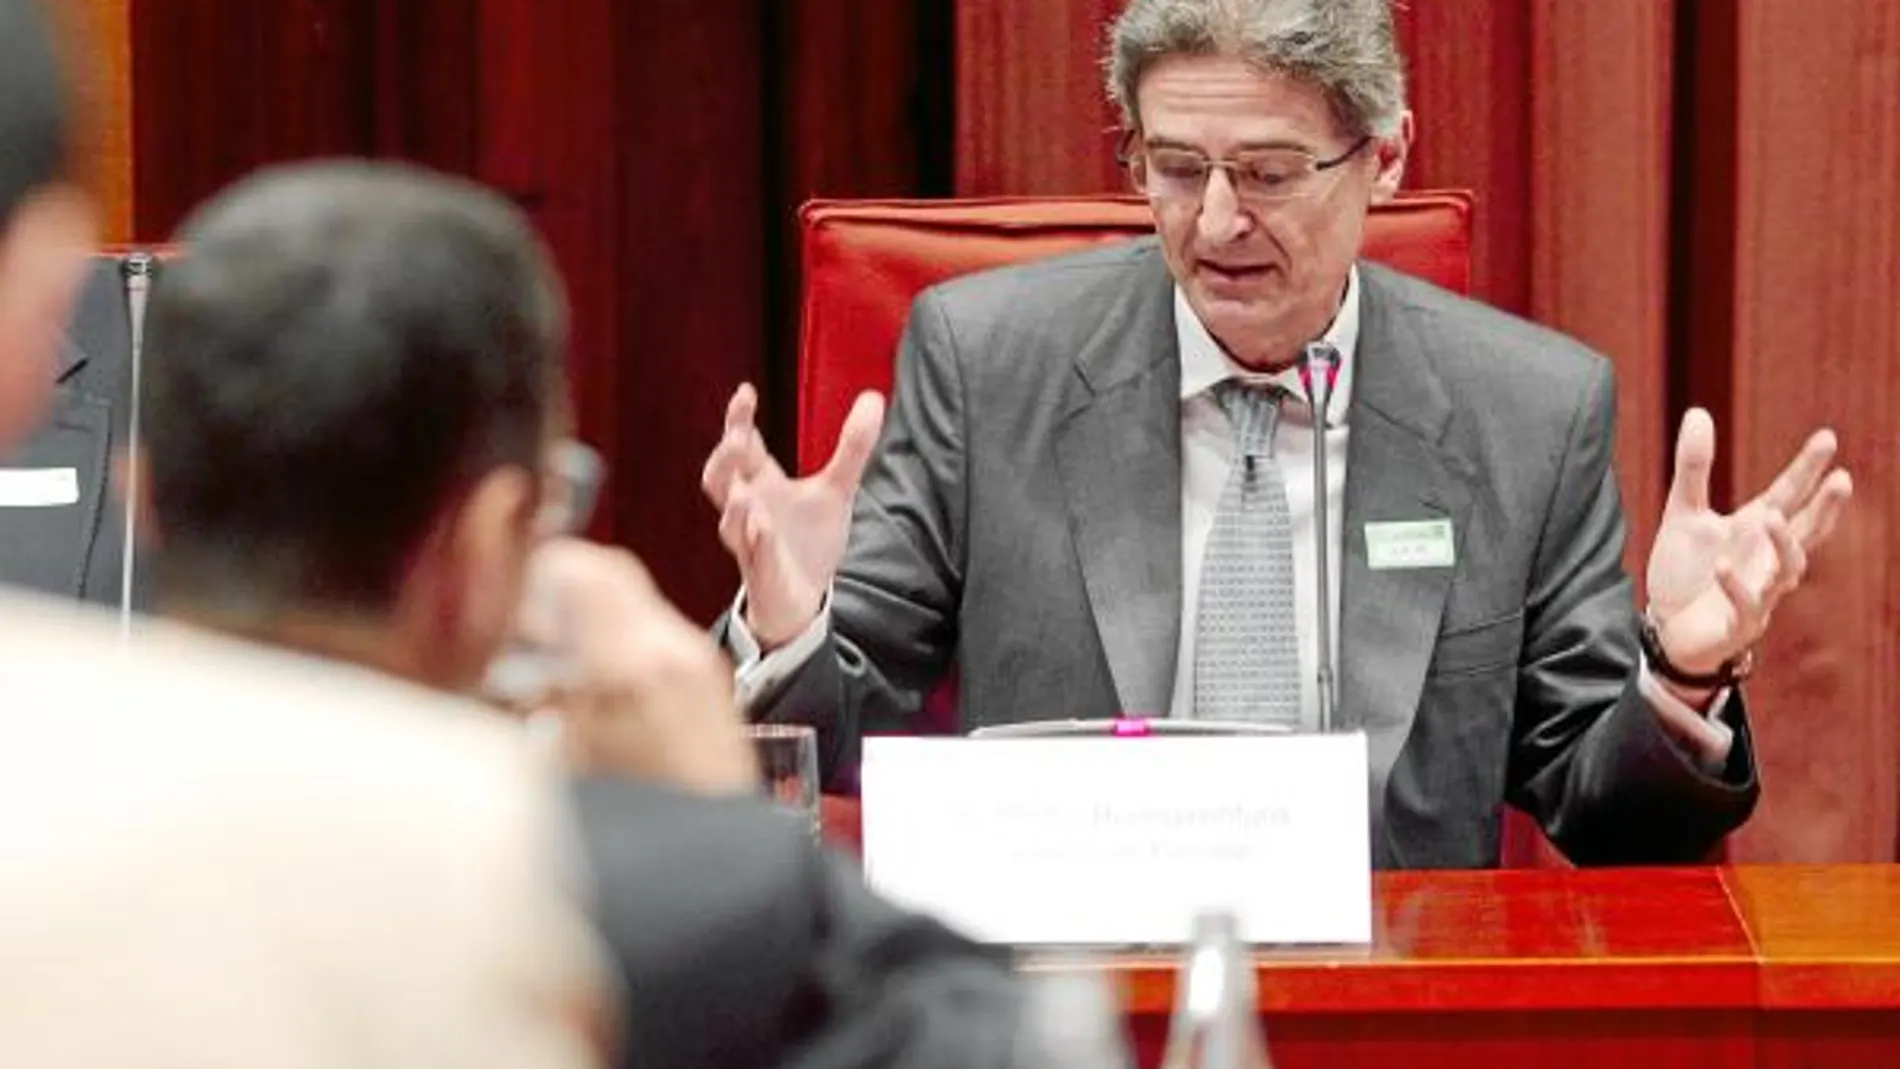 El ex directivo de Ferrovial Pedro Buenaventura negó en el Parlament haber financiado irregularmente a Convergència